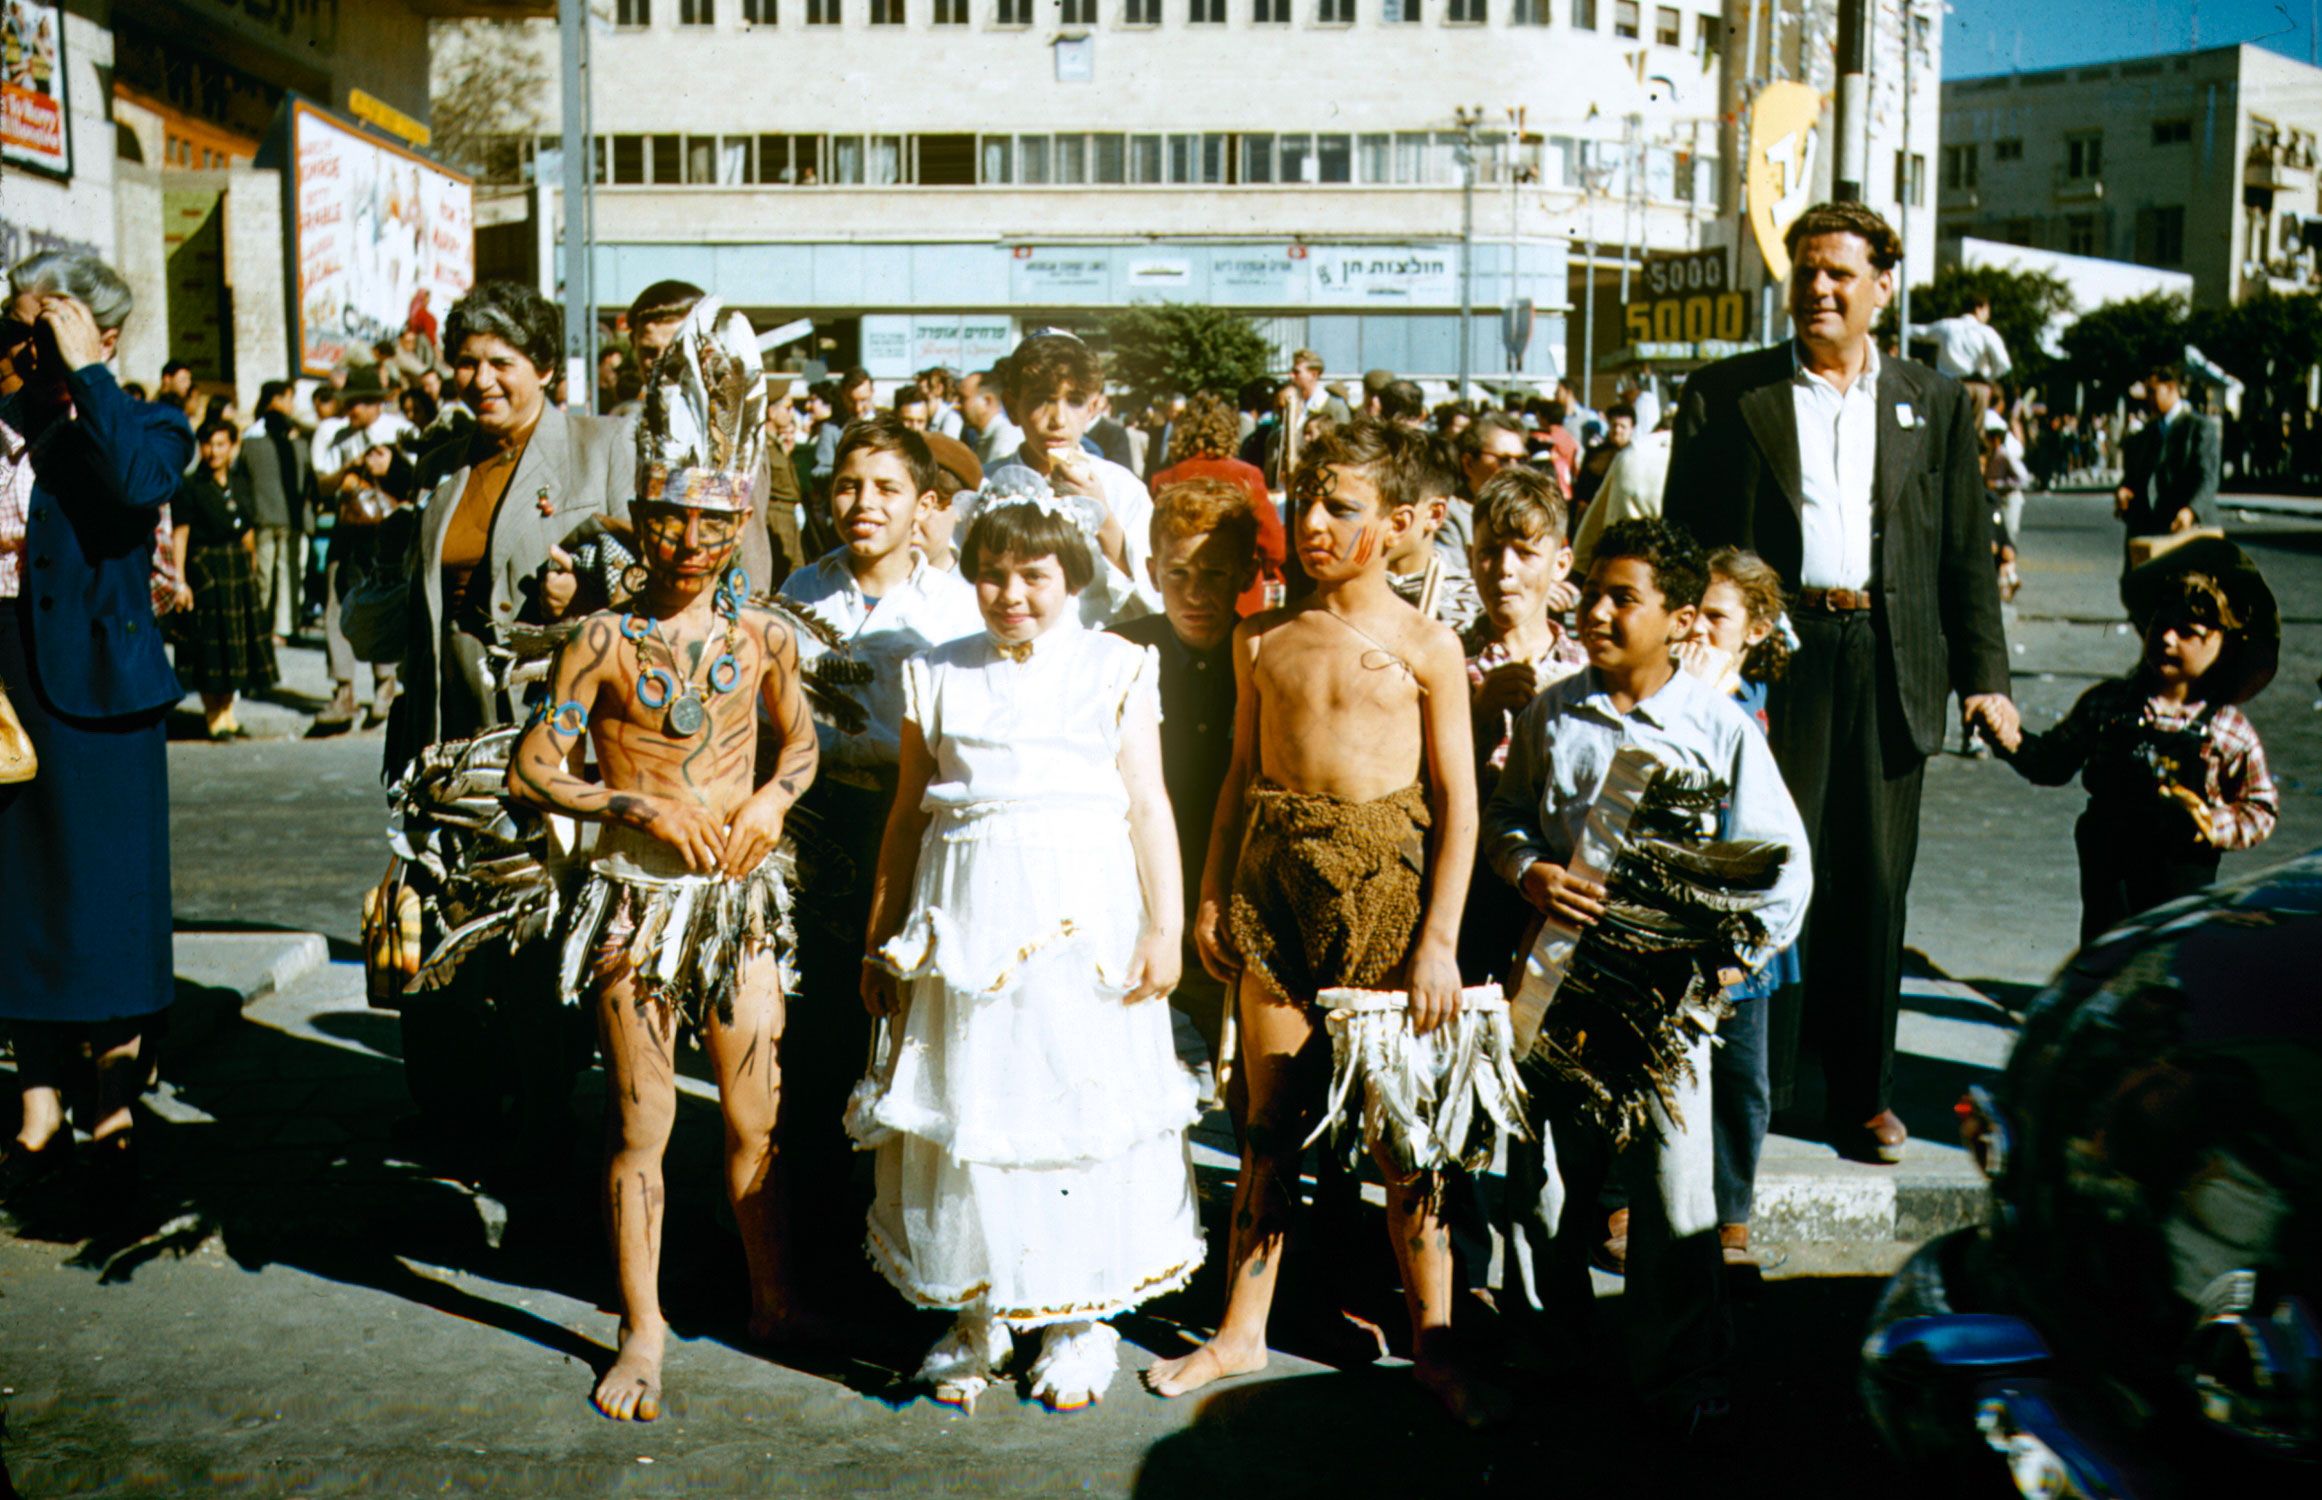 Celebrating Purim in Israel, 1955.